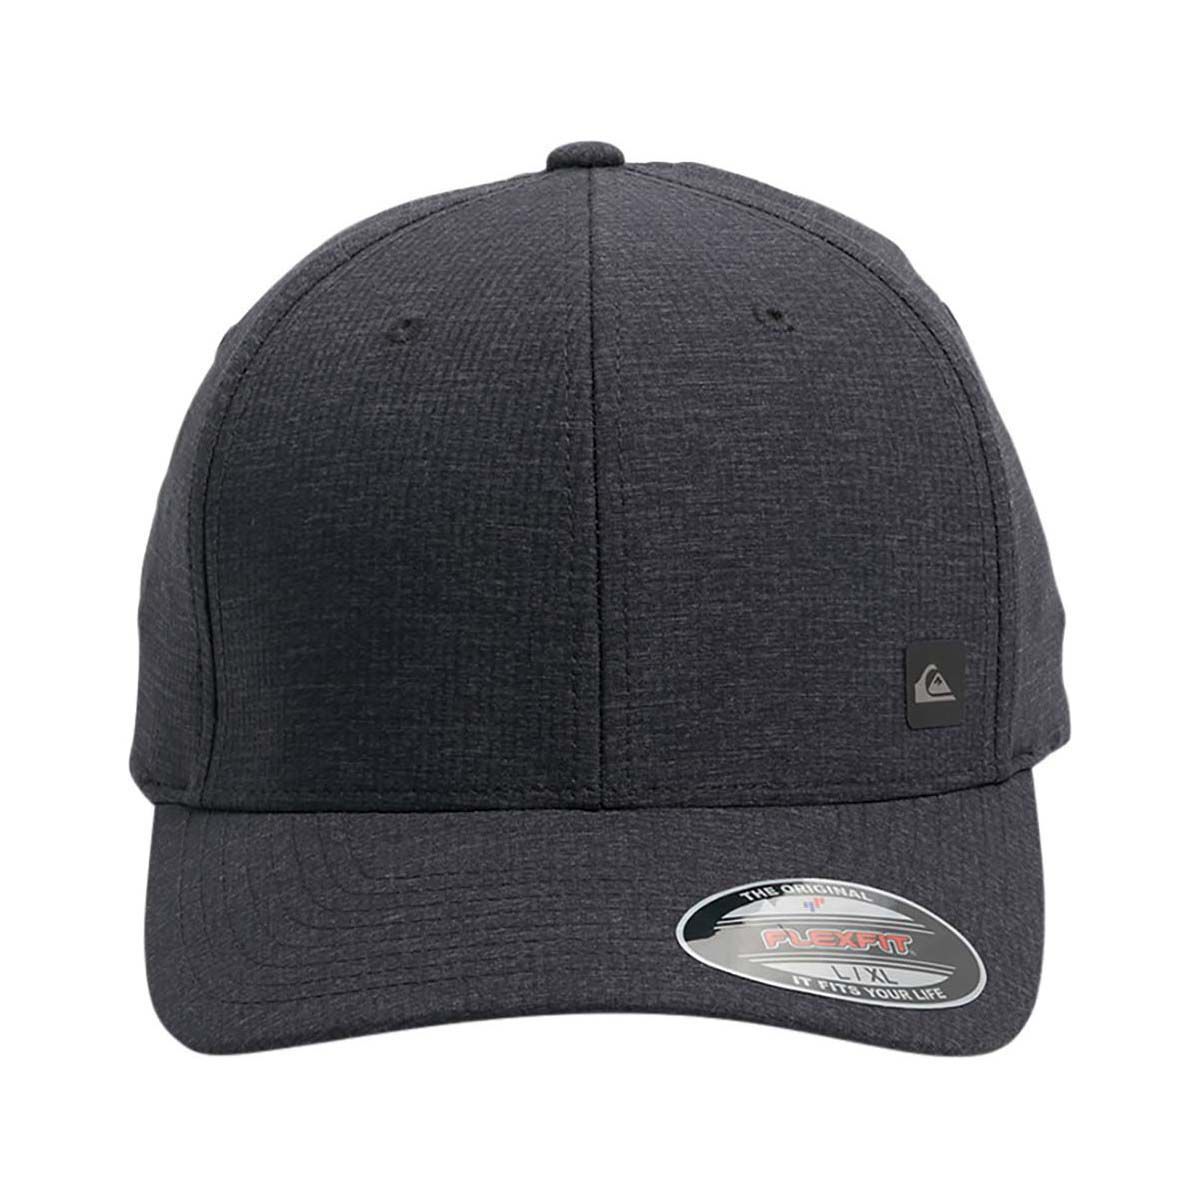 Speared Spearfishing Apparel Flexfit Hat (Large/XLarge, Black)